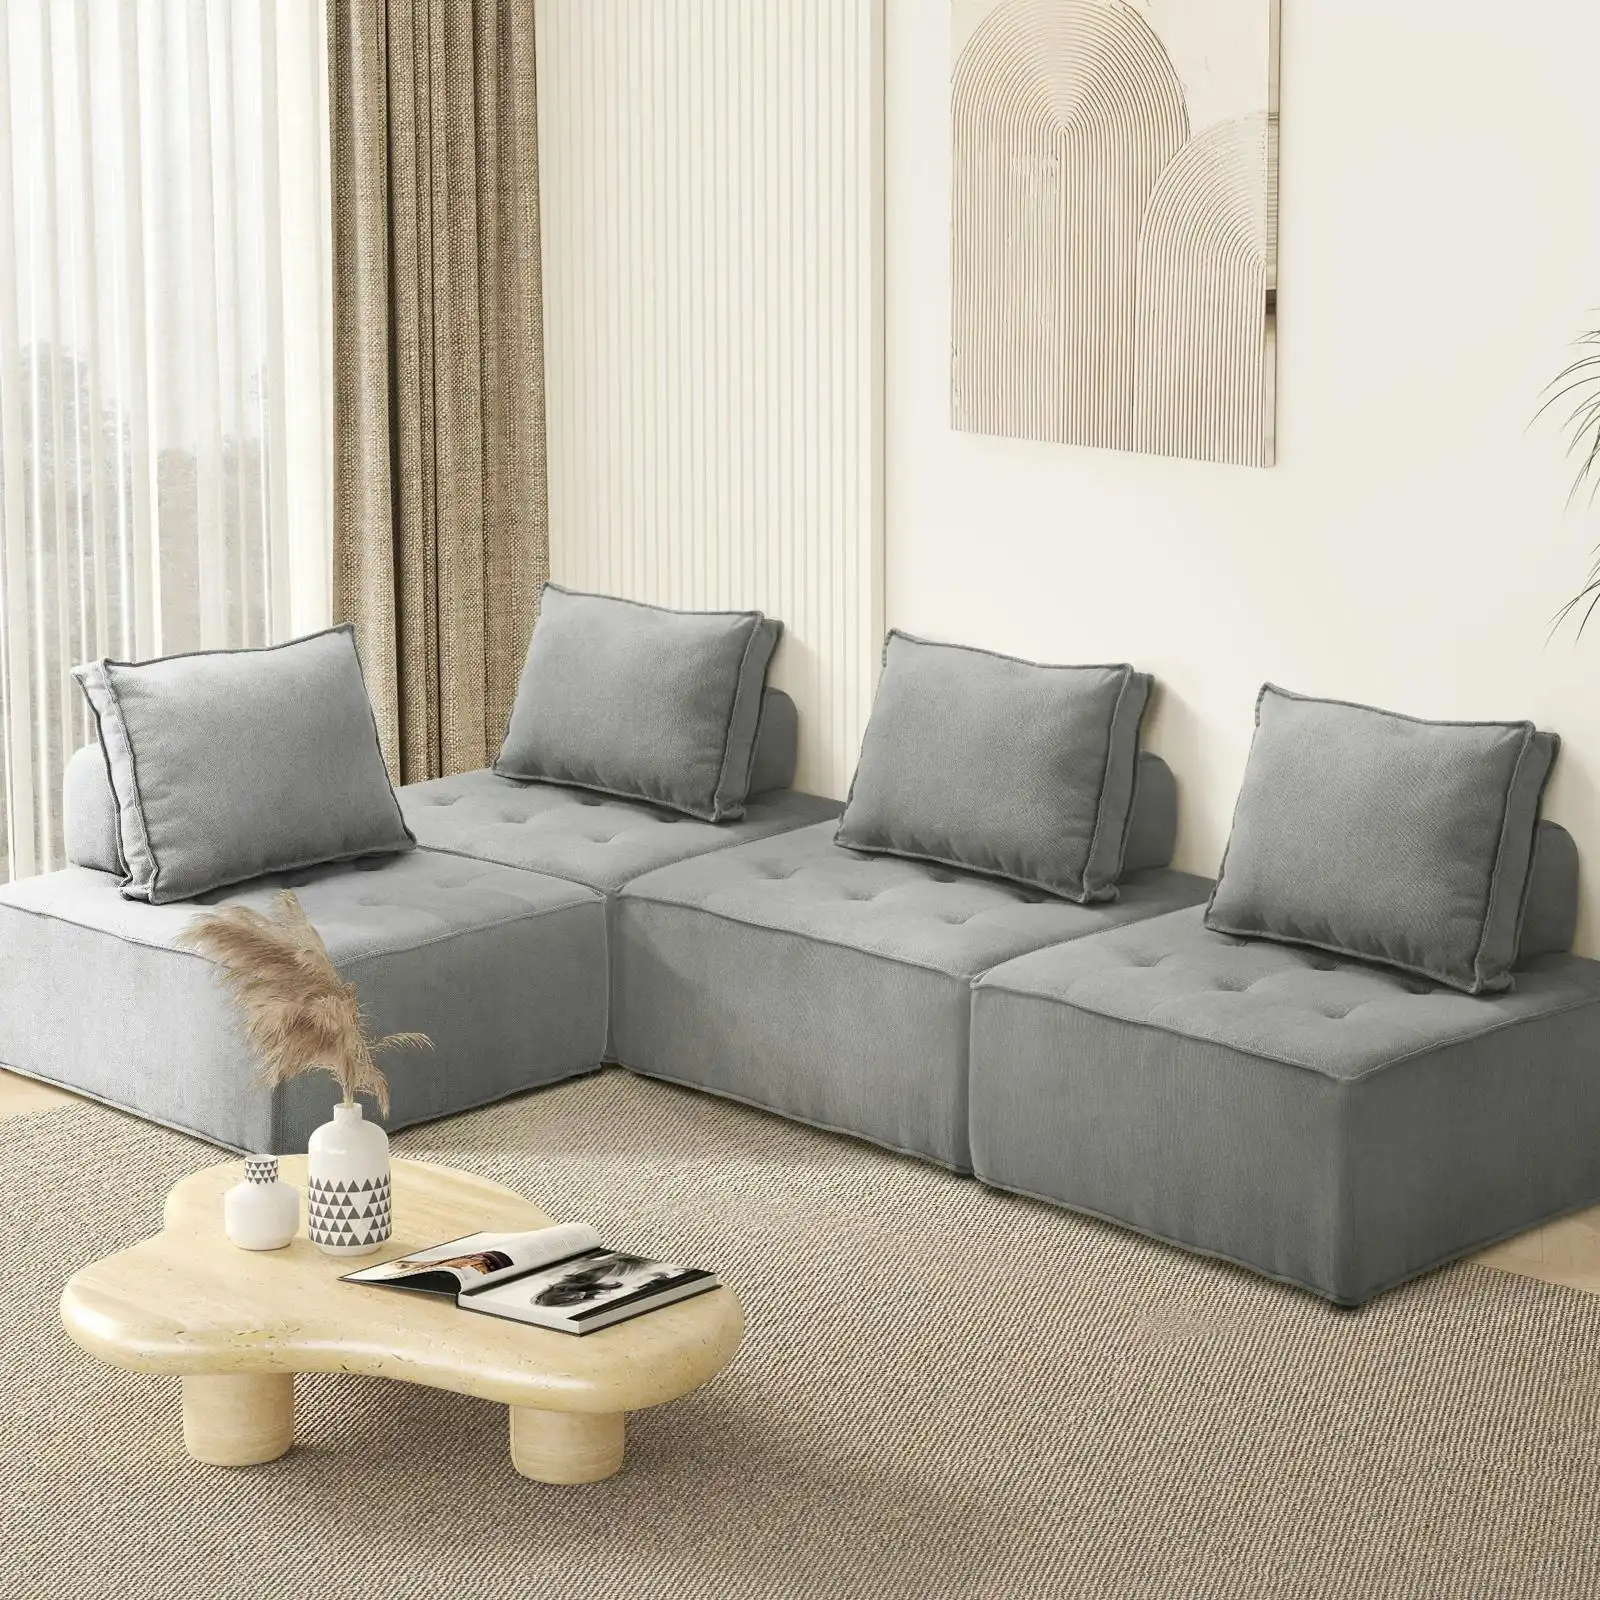 Oikiture 4PCS Modular Sofa Lounge Chair Armless Adjustable Back Linen Grey